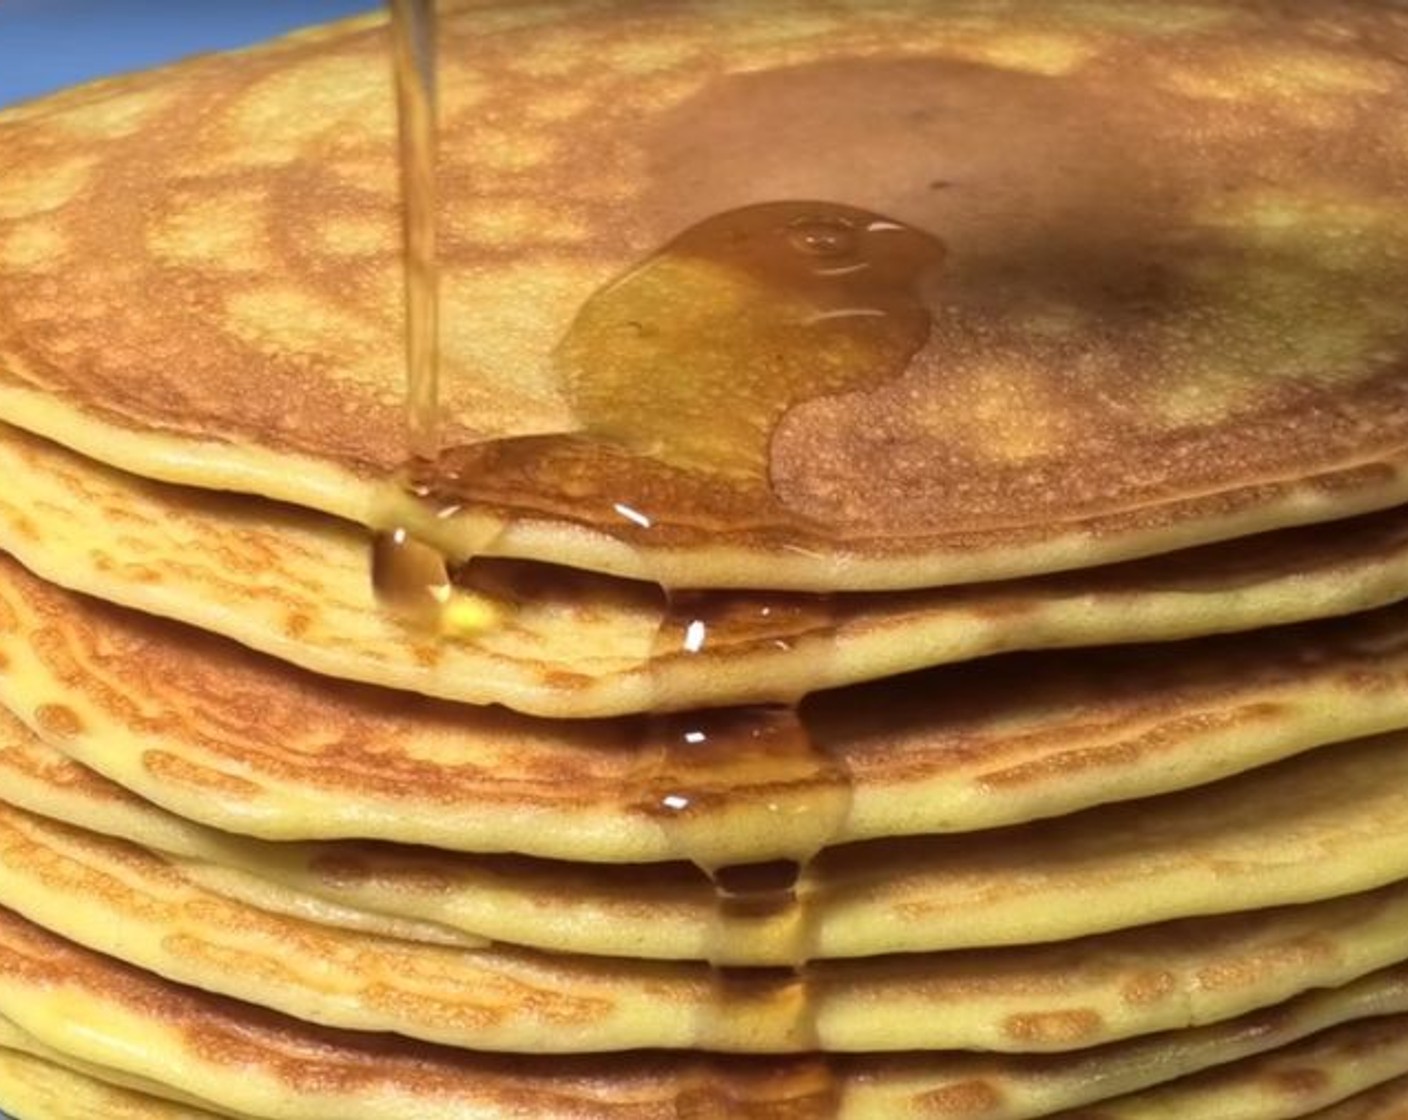 Healthy Pancakes